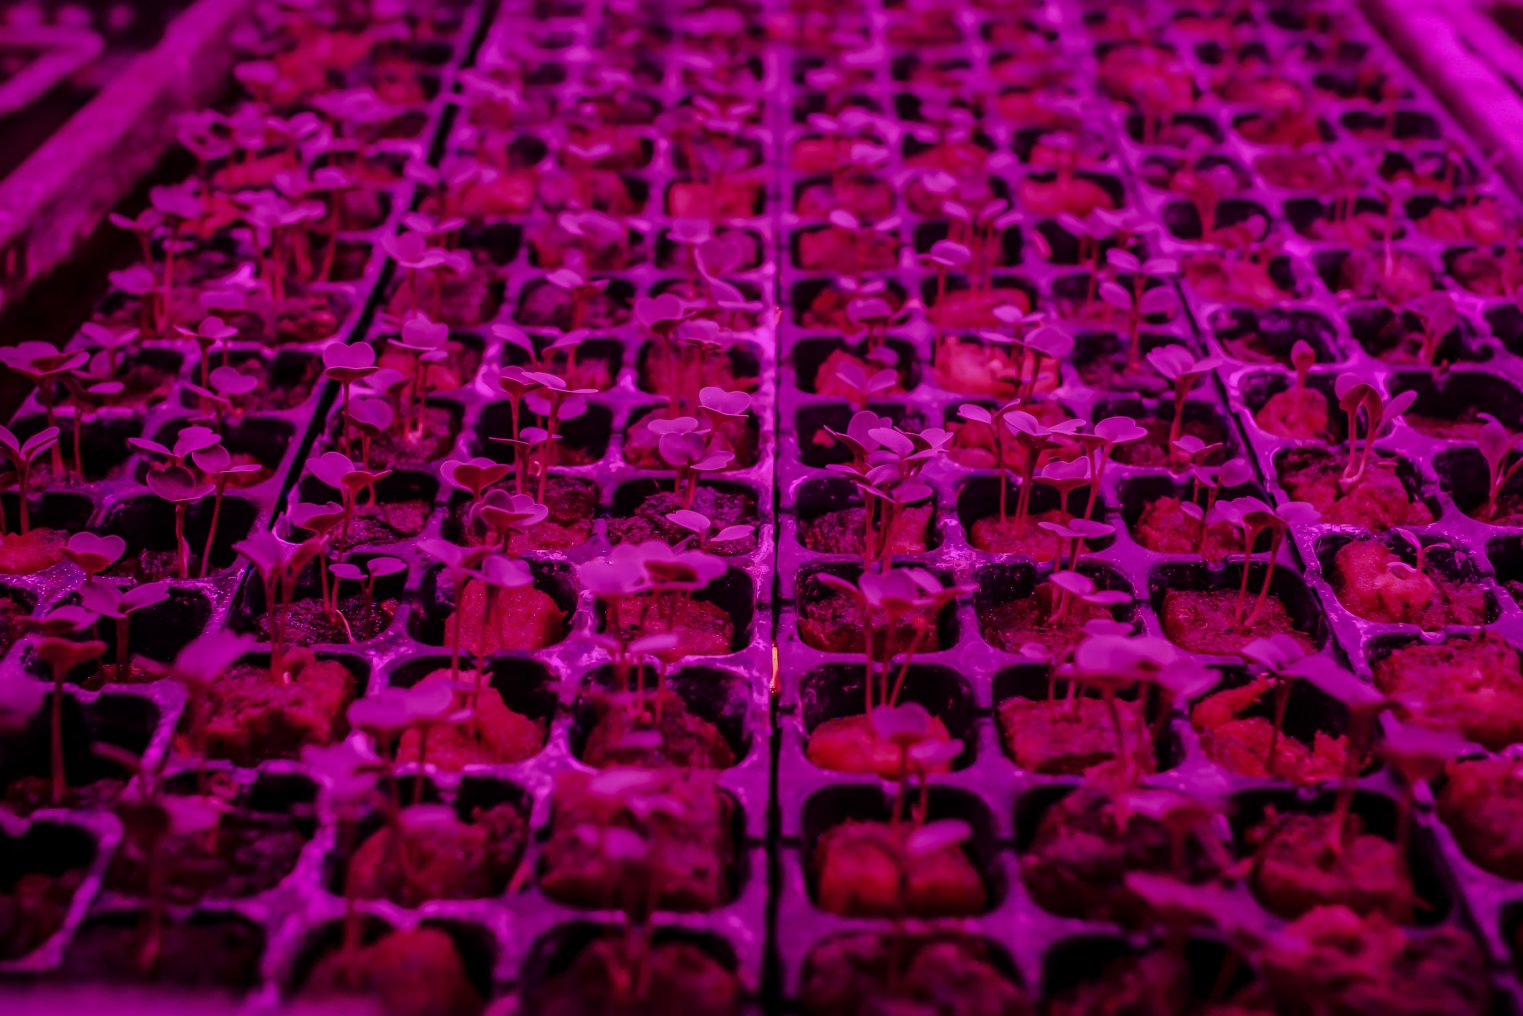 Sejumlah bibit tanaman sayuran diberikan sinar LED pada sebuah gudang di Sentra Farm, Cimanggis, Depok, Jawa Barat, Rabu (19/1/2022). Beragam sayuran seperti selada keriting, romaine, oakleaf green, siomak, kailan dan lainnya dibudidayakan dalam ruangan yang penyinaran dan suhunya tetap stabil di Sentra Farm mampu memproduksi 10/30 kilogram Perhari.